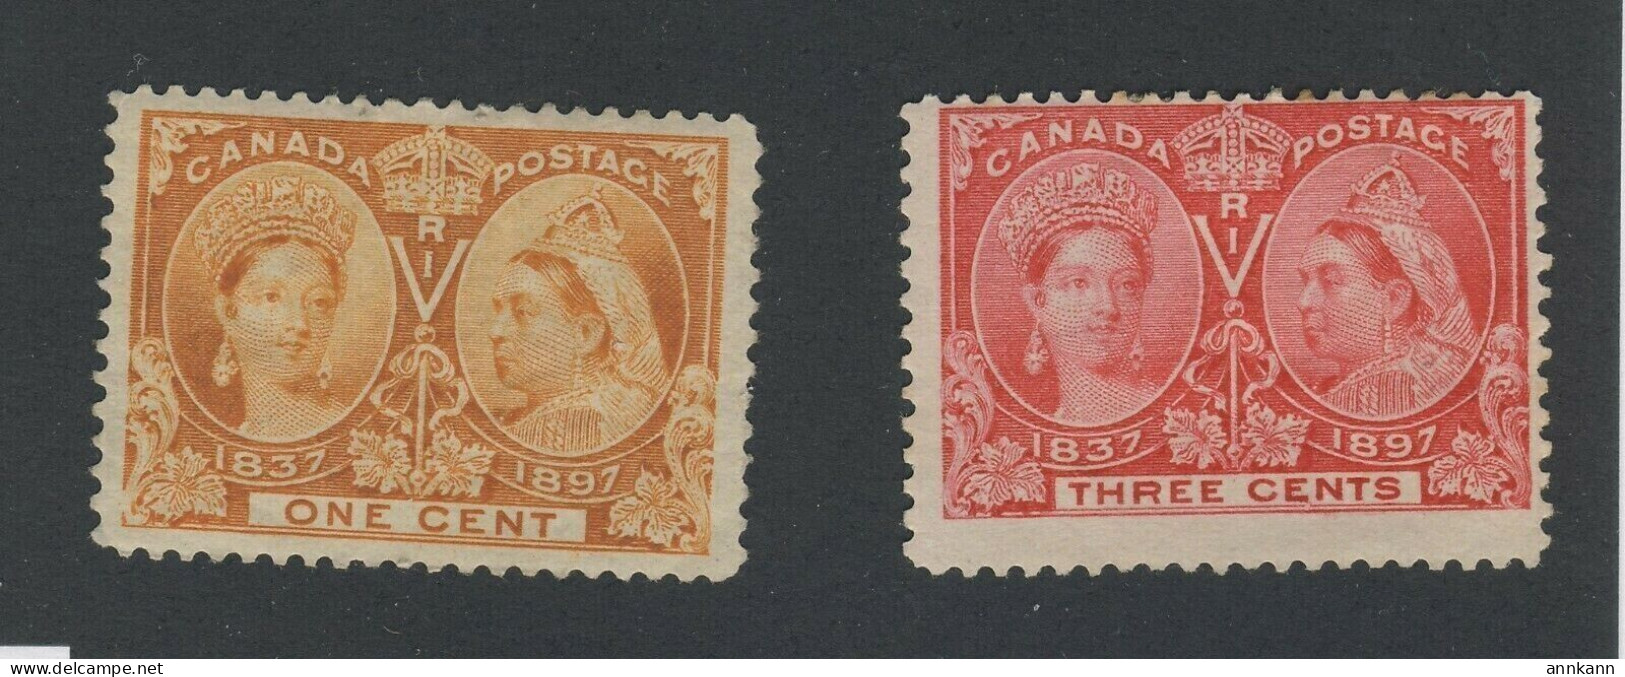 2x Canada Victoria Jubilee MH Stamps #51-1c F/VF 53-3c Fine Guide Value = $35.00 - Ongebruikt